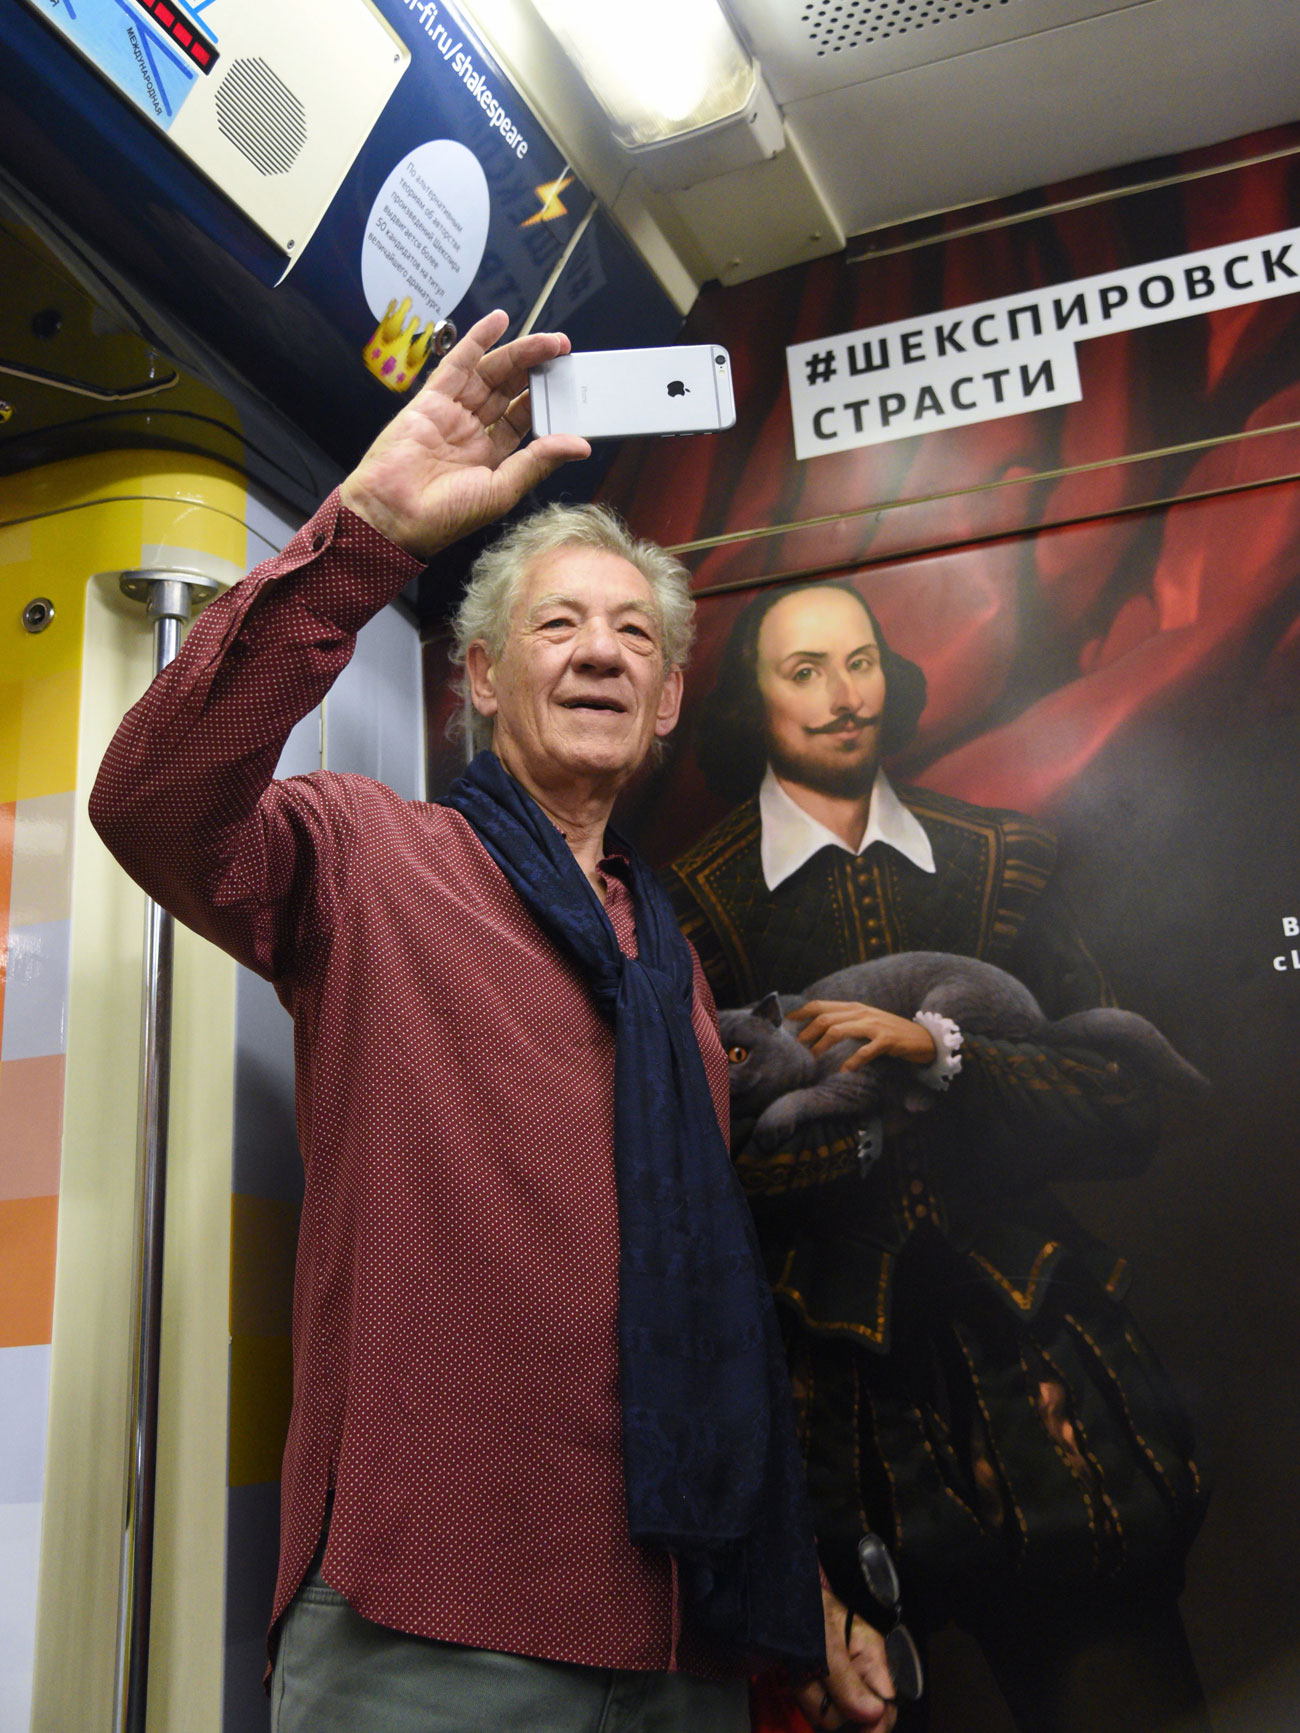 Ian McKellen rides Shakespeare train in Moscow metro. Source: Vasily Kuzmichonok / TASS